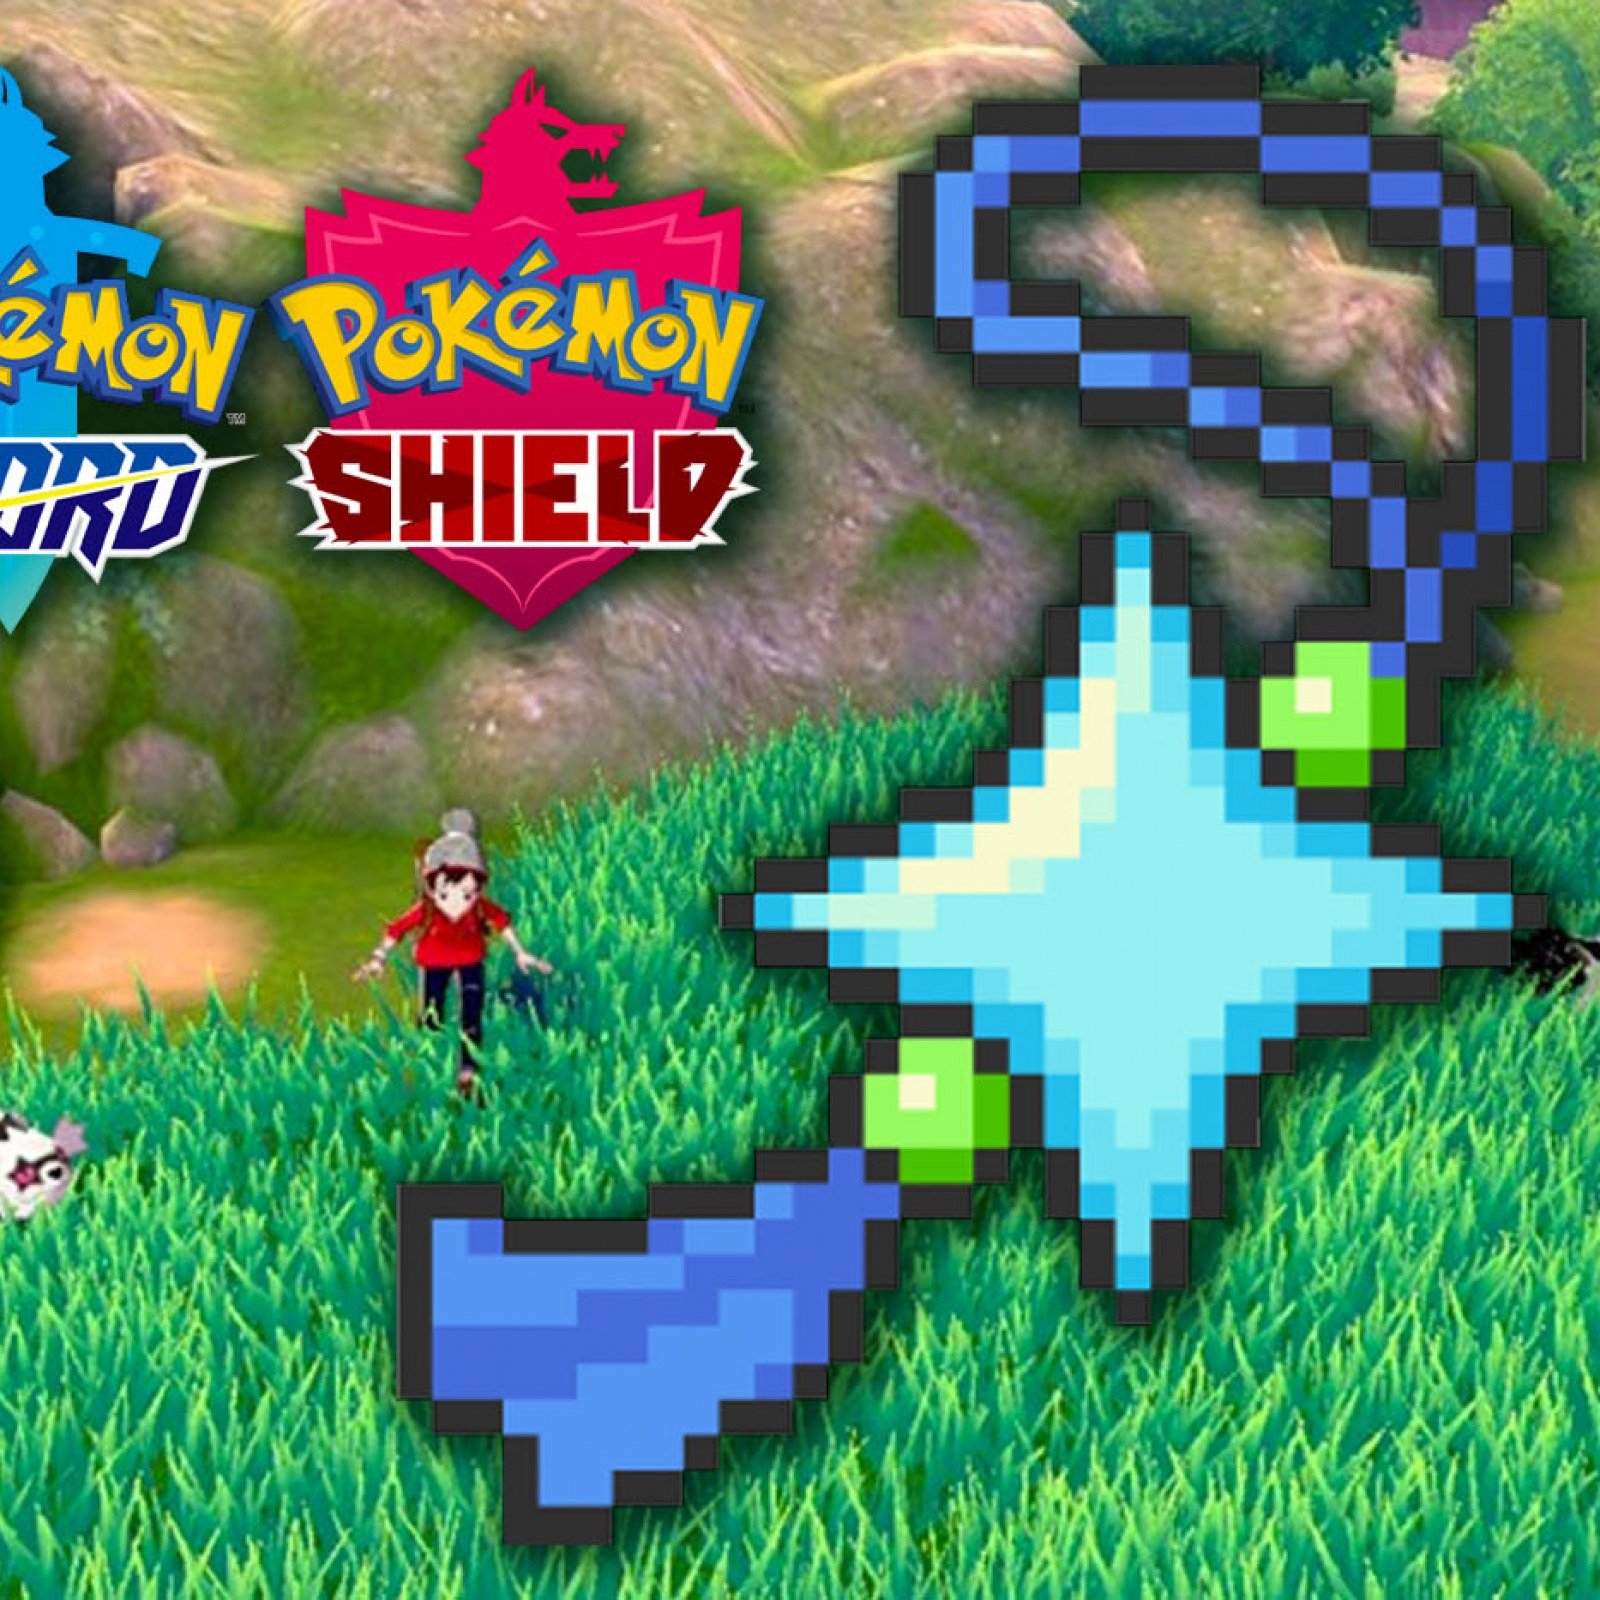 Guide Shiny Pokémon Hunting In Pokémon Sword And Shield